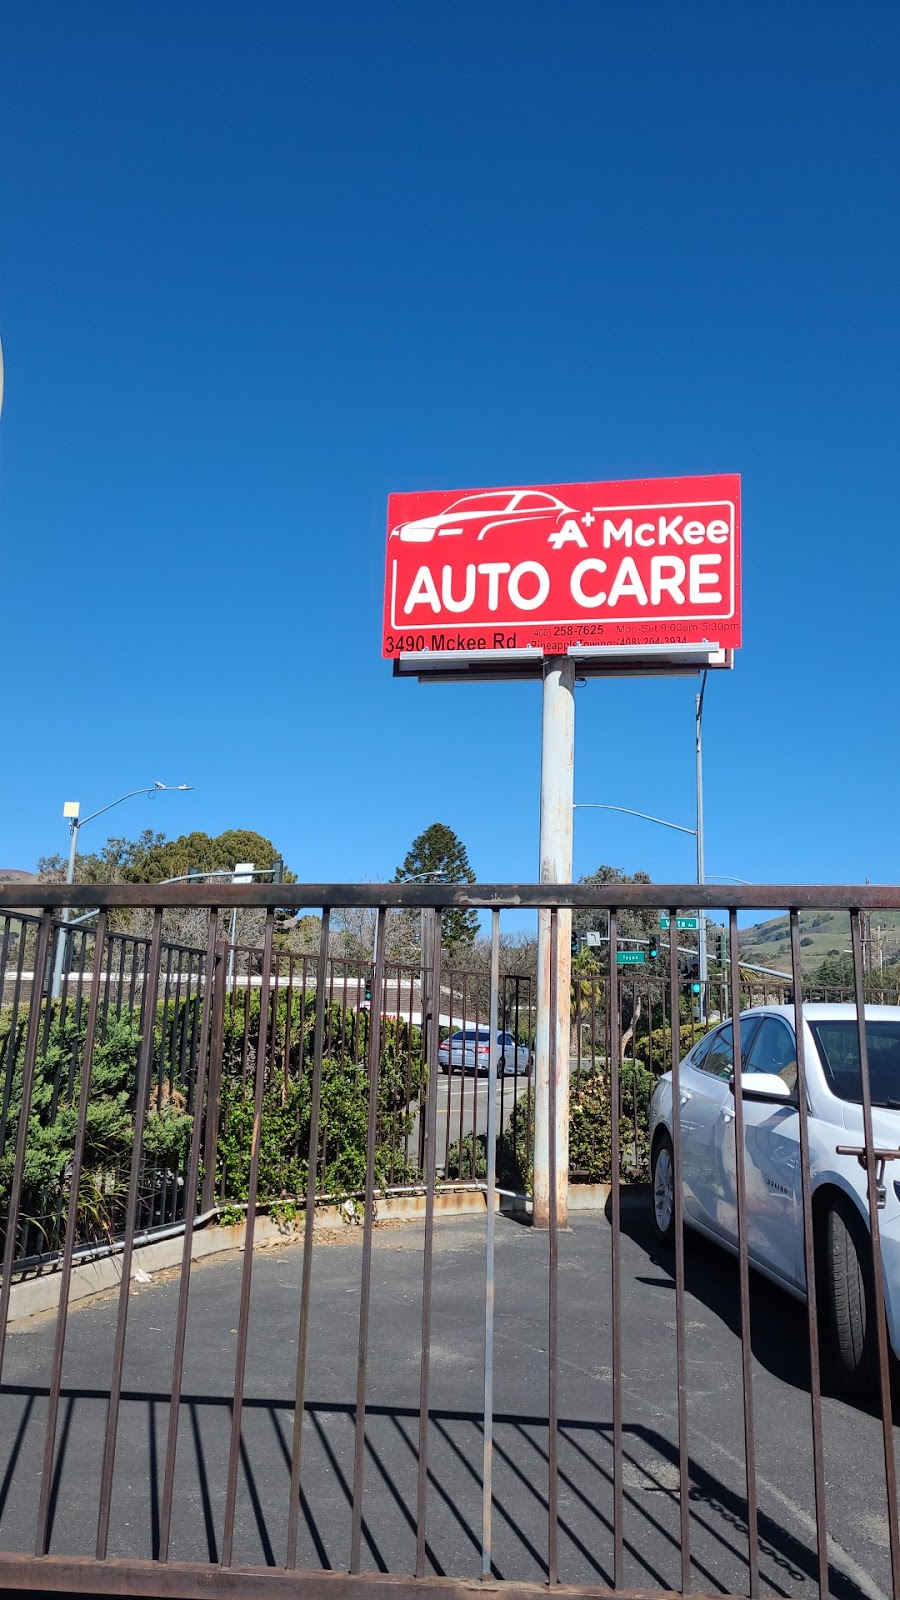 A+ Mc Kee Auto Care | 3490 McKee Rd, San Jose, CA 95127 | Phone: (408) 258-7625